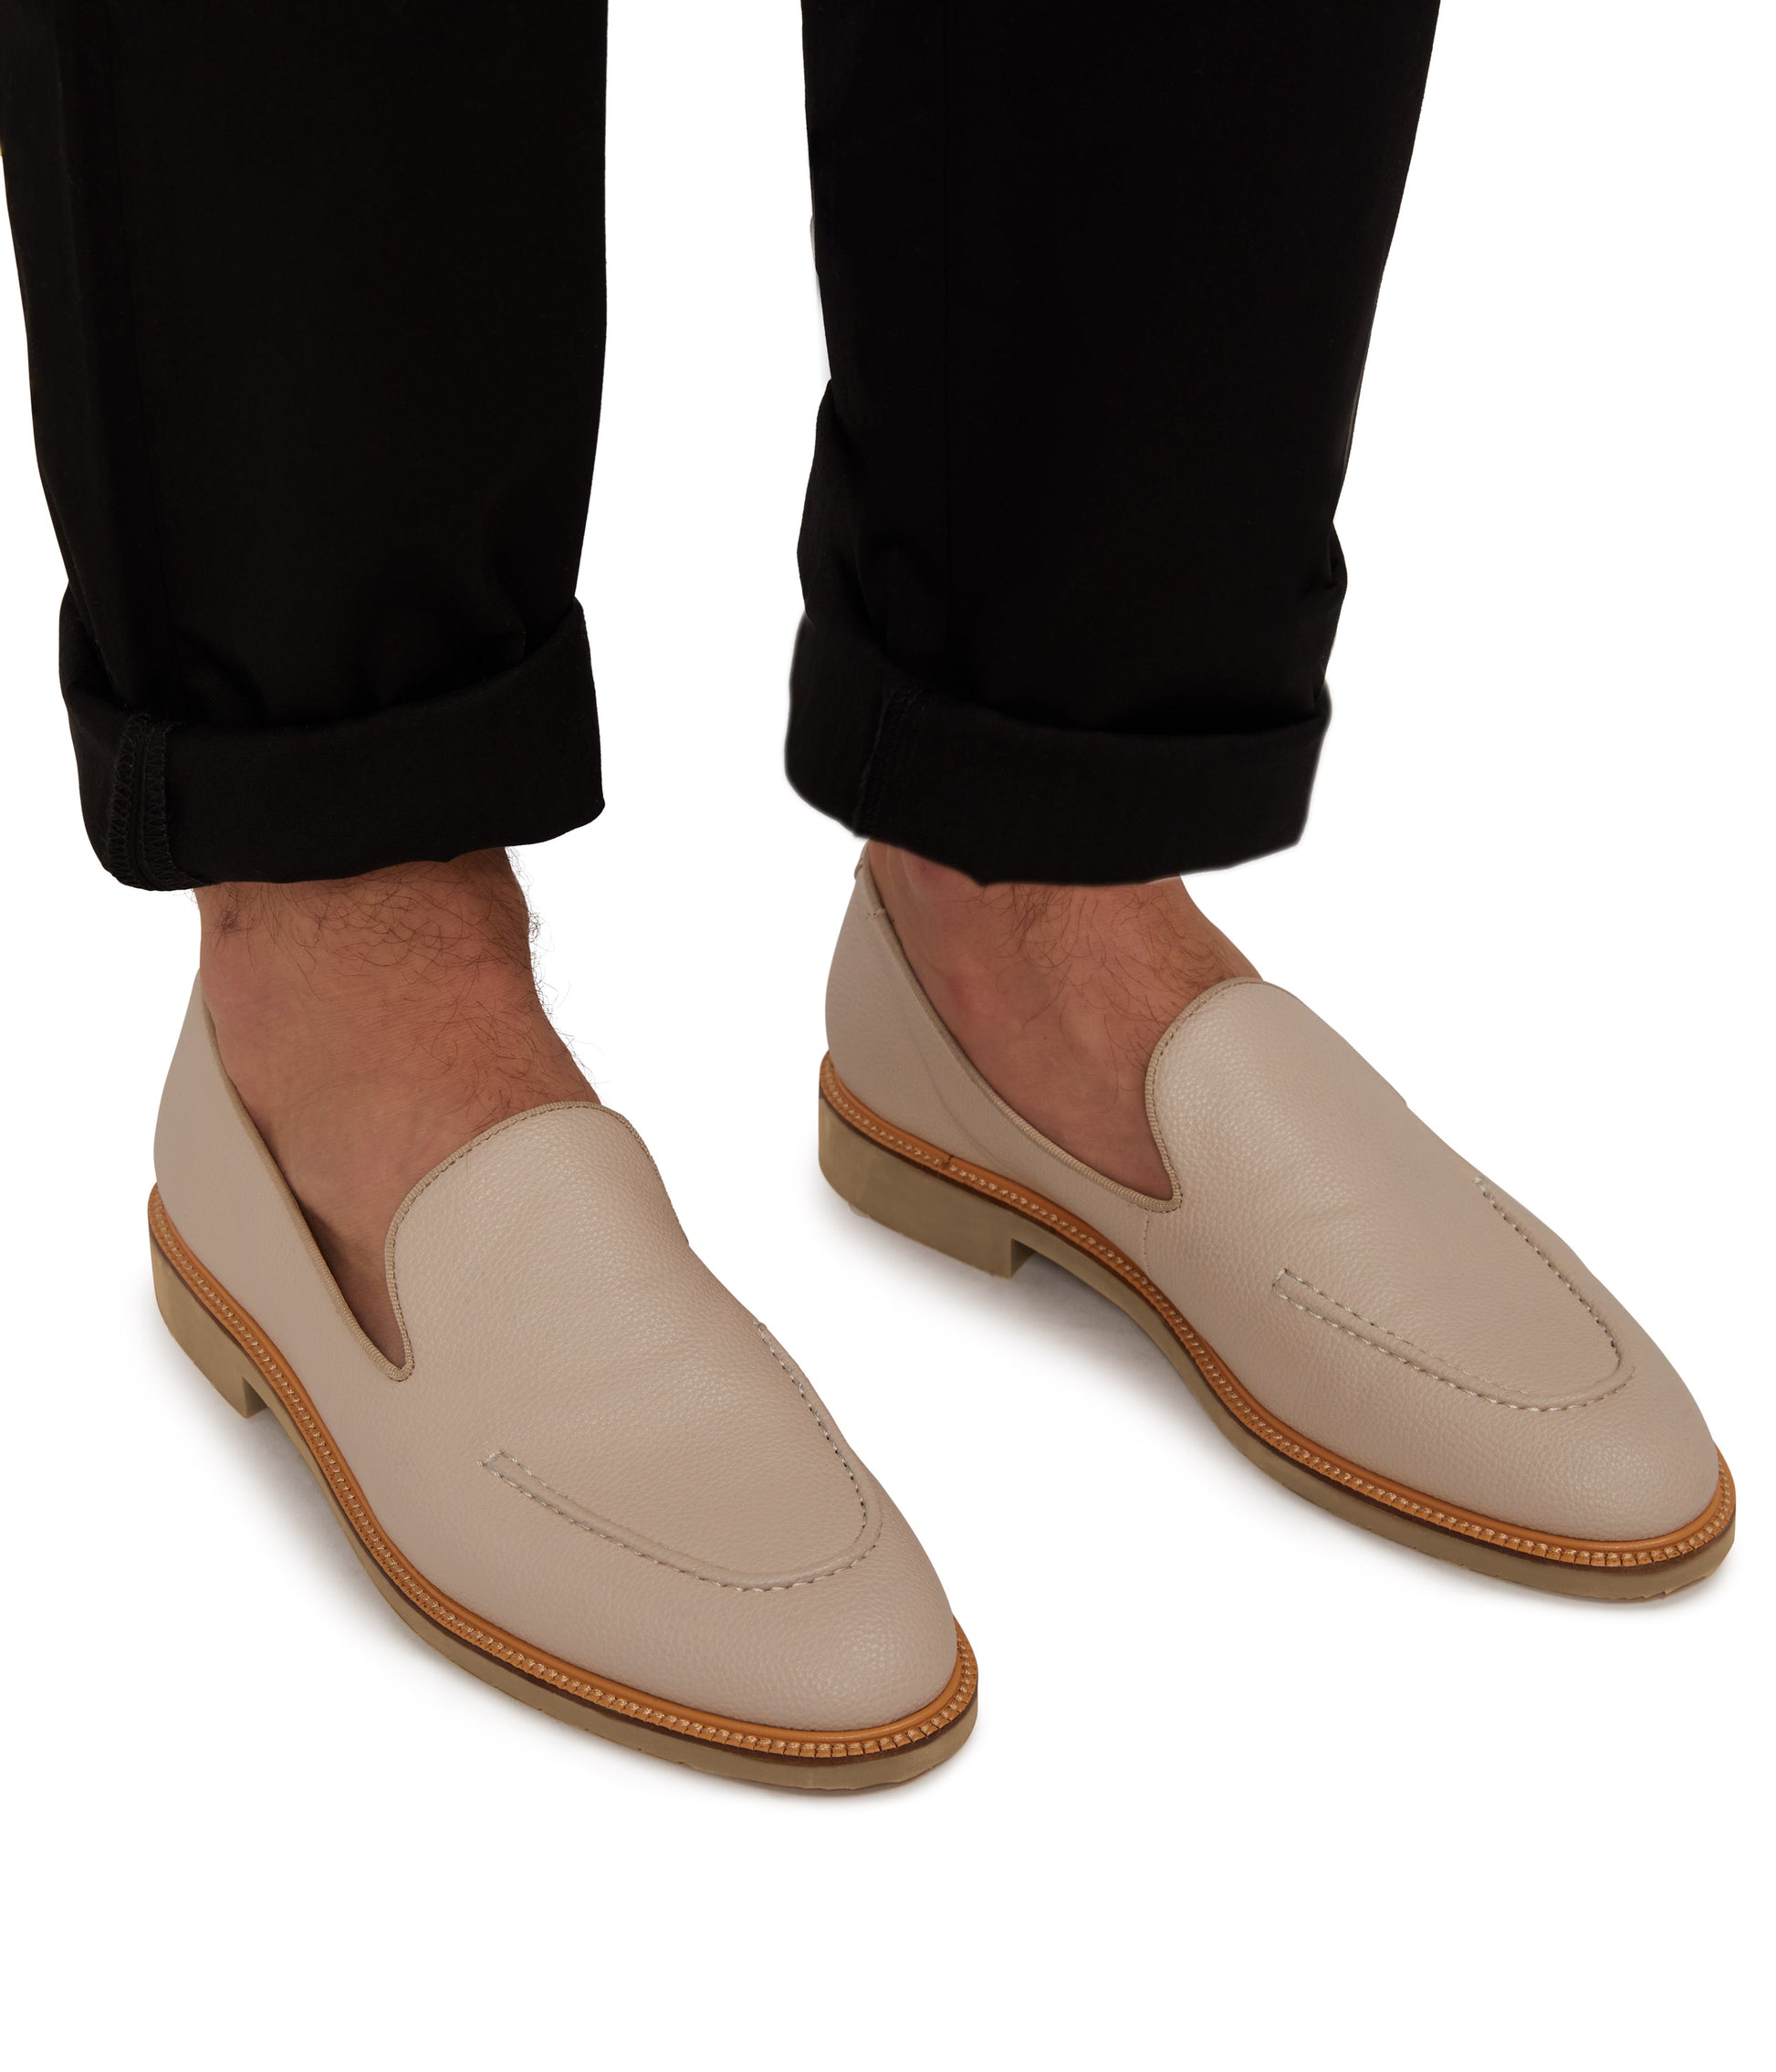 variant:: brun  -- altman shoe brun 